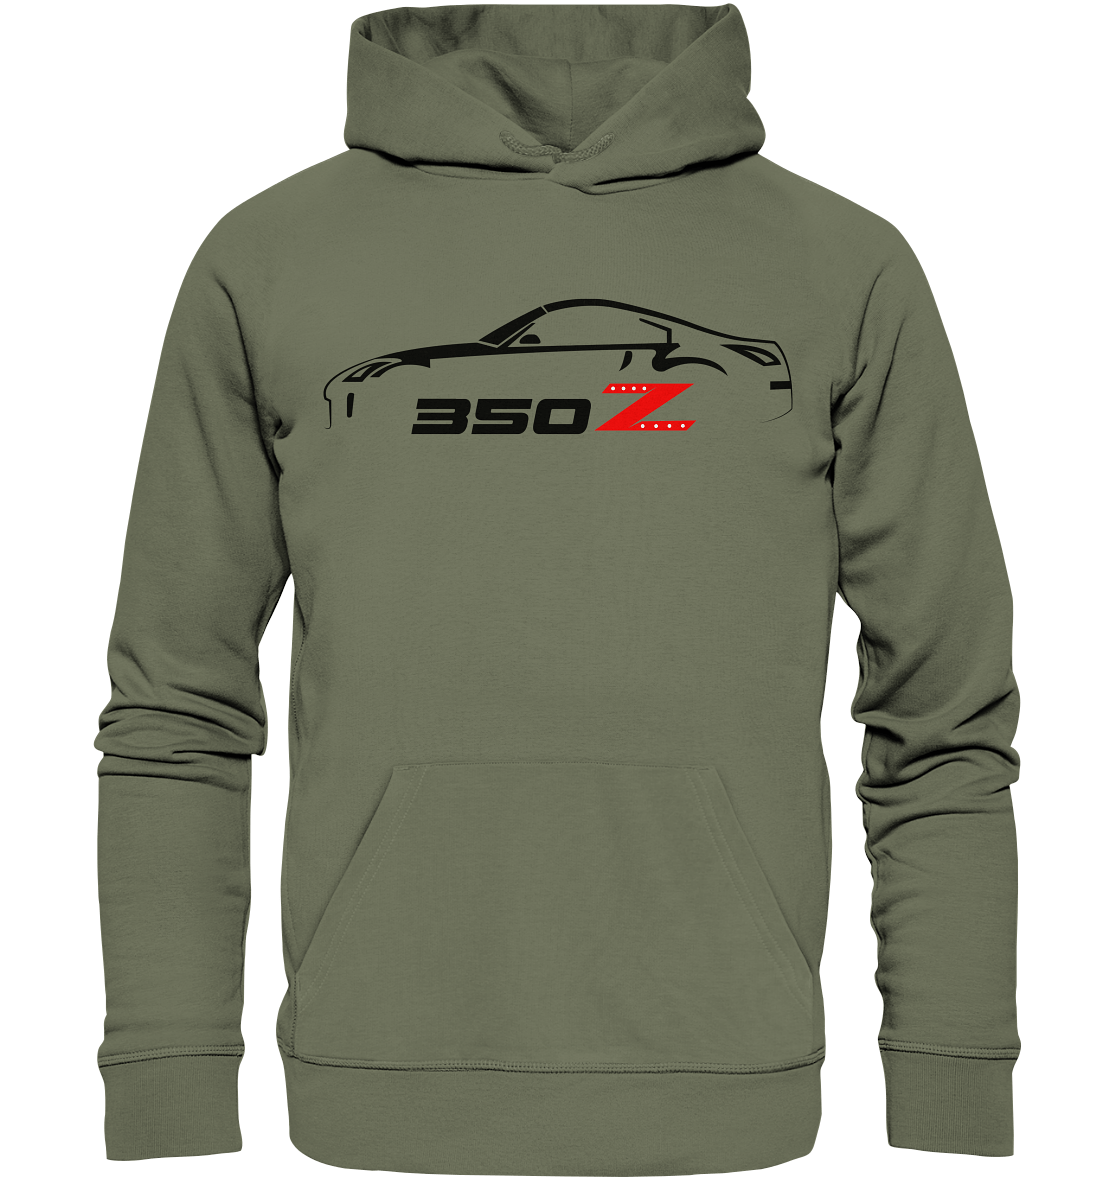 Nissan 350Z Silhouette - Premium Unisex Hoodie - MotoMerch.de